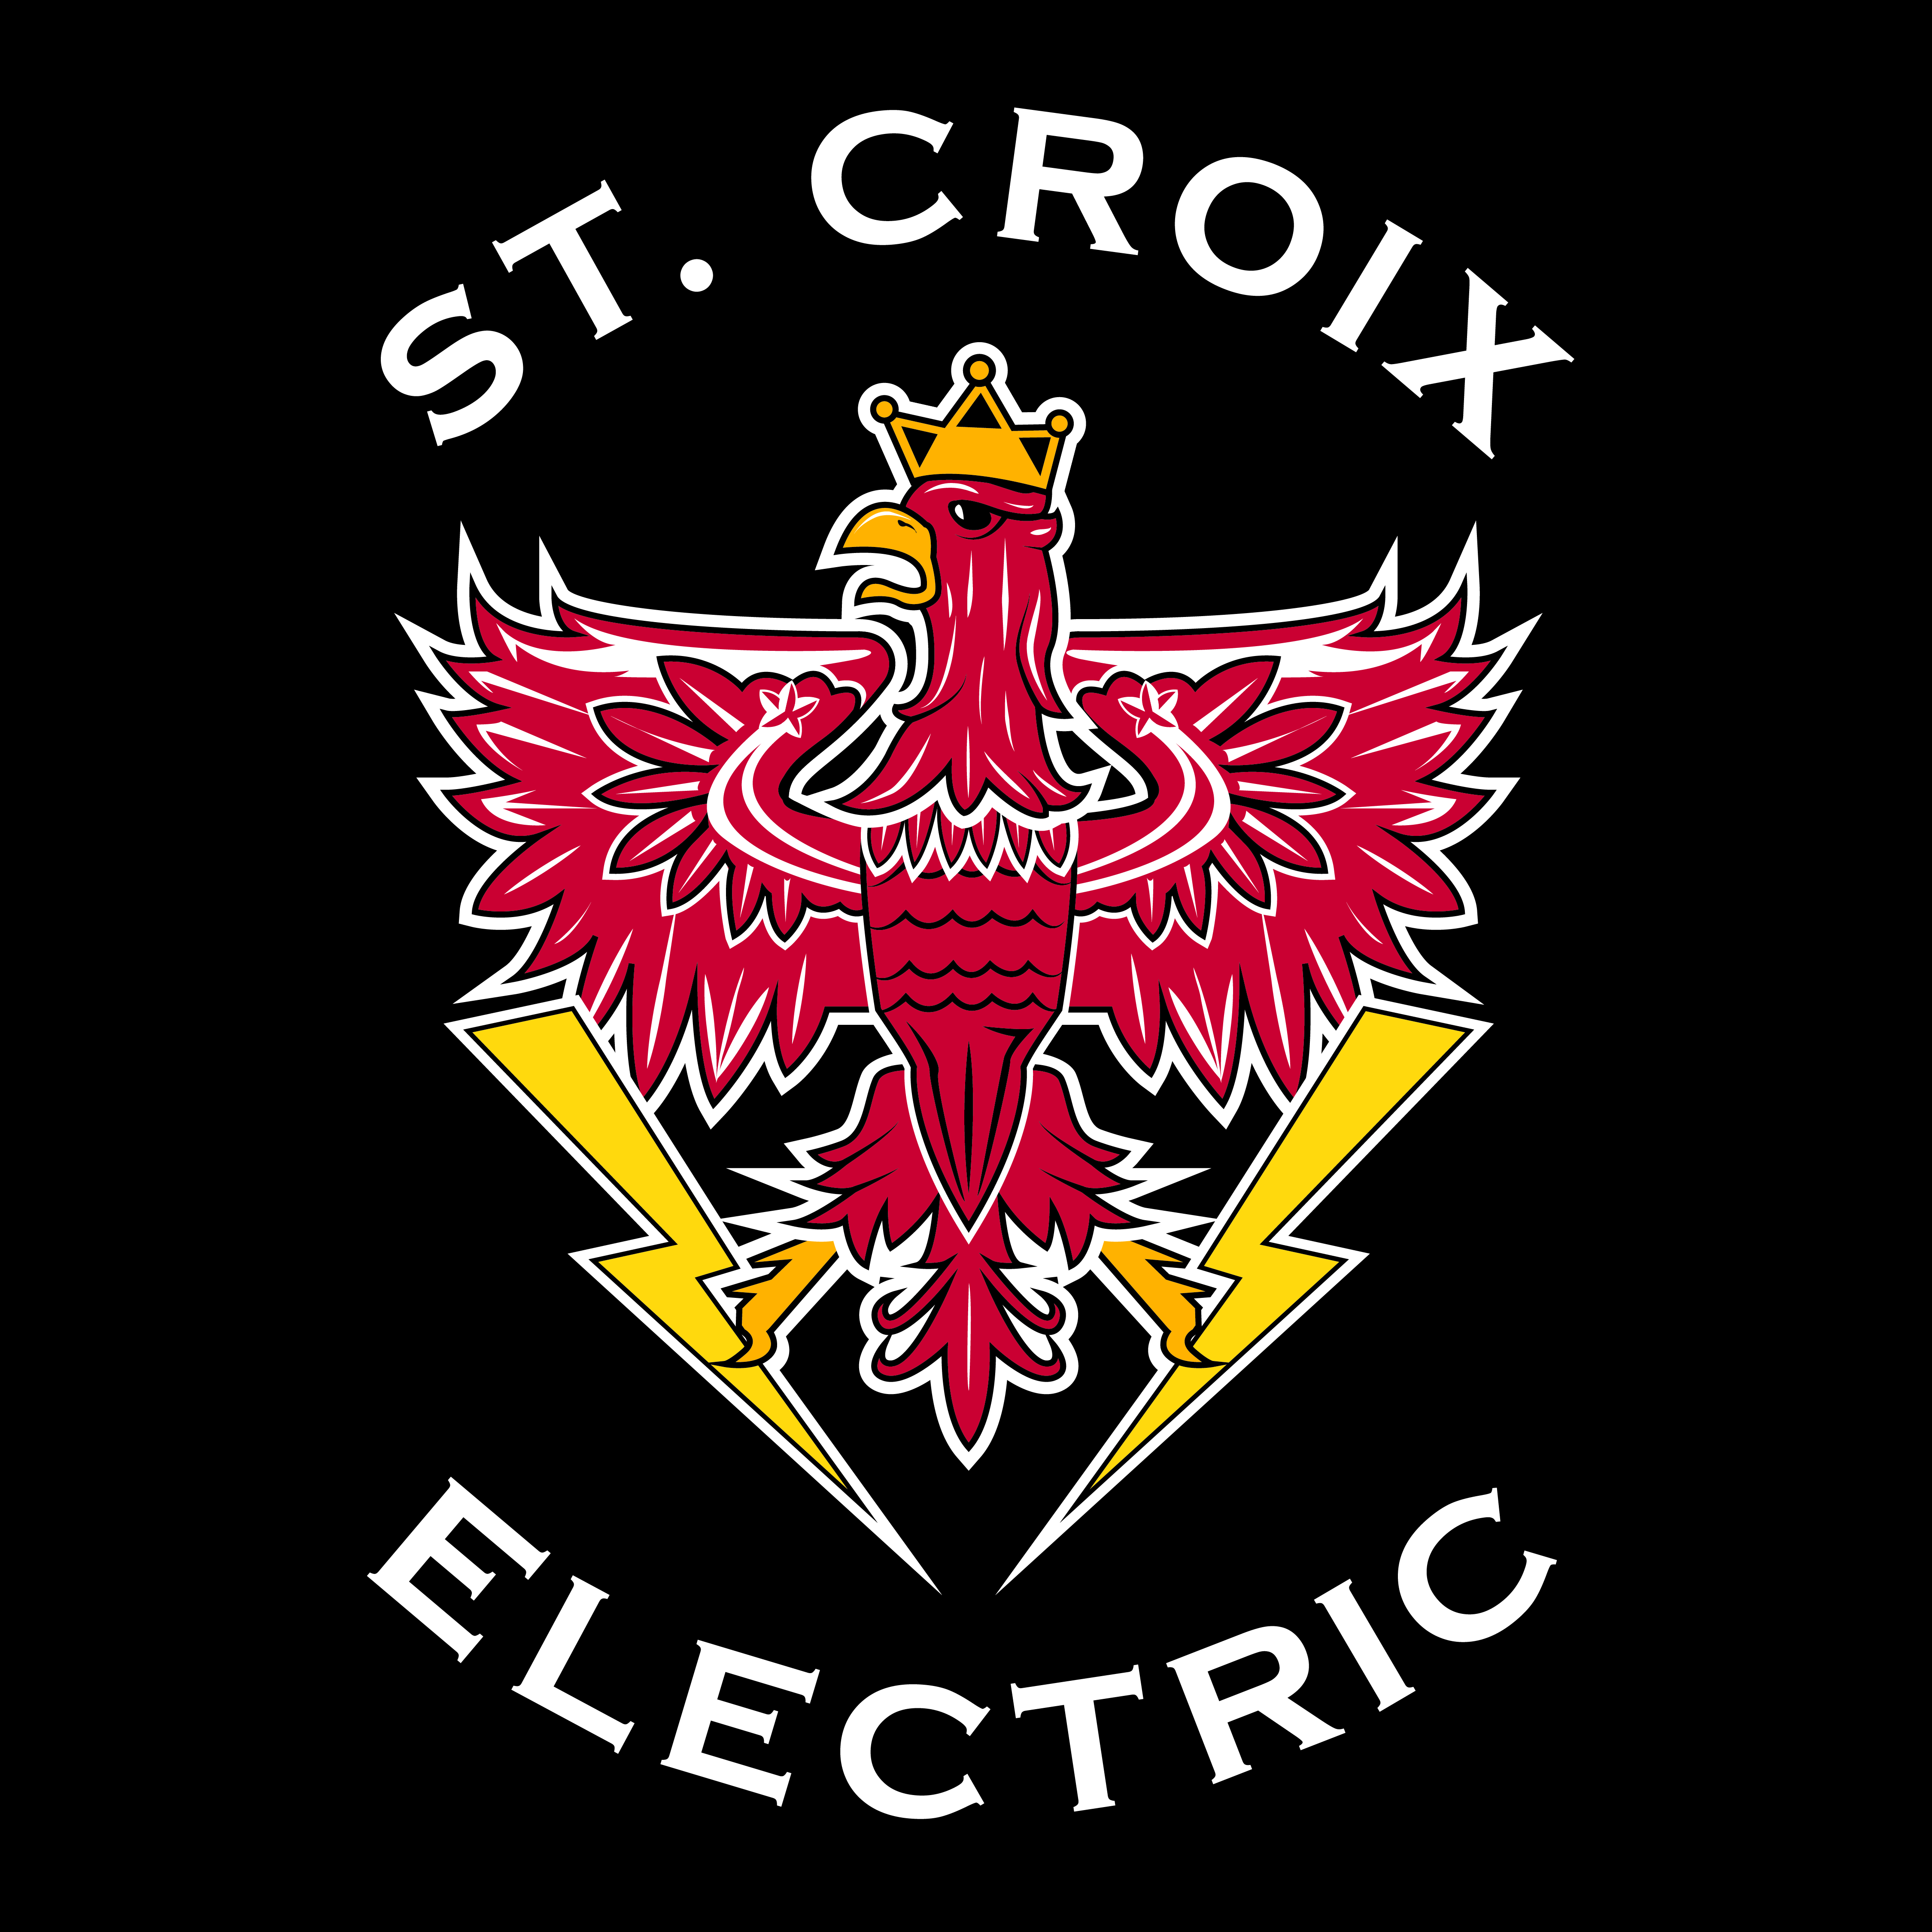 St Croix Electric Inc Logo